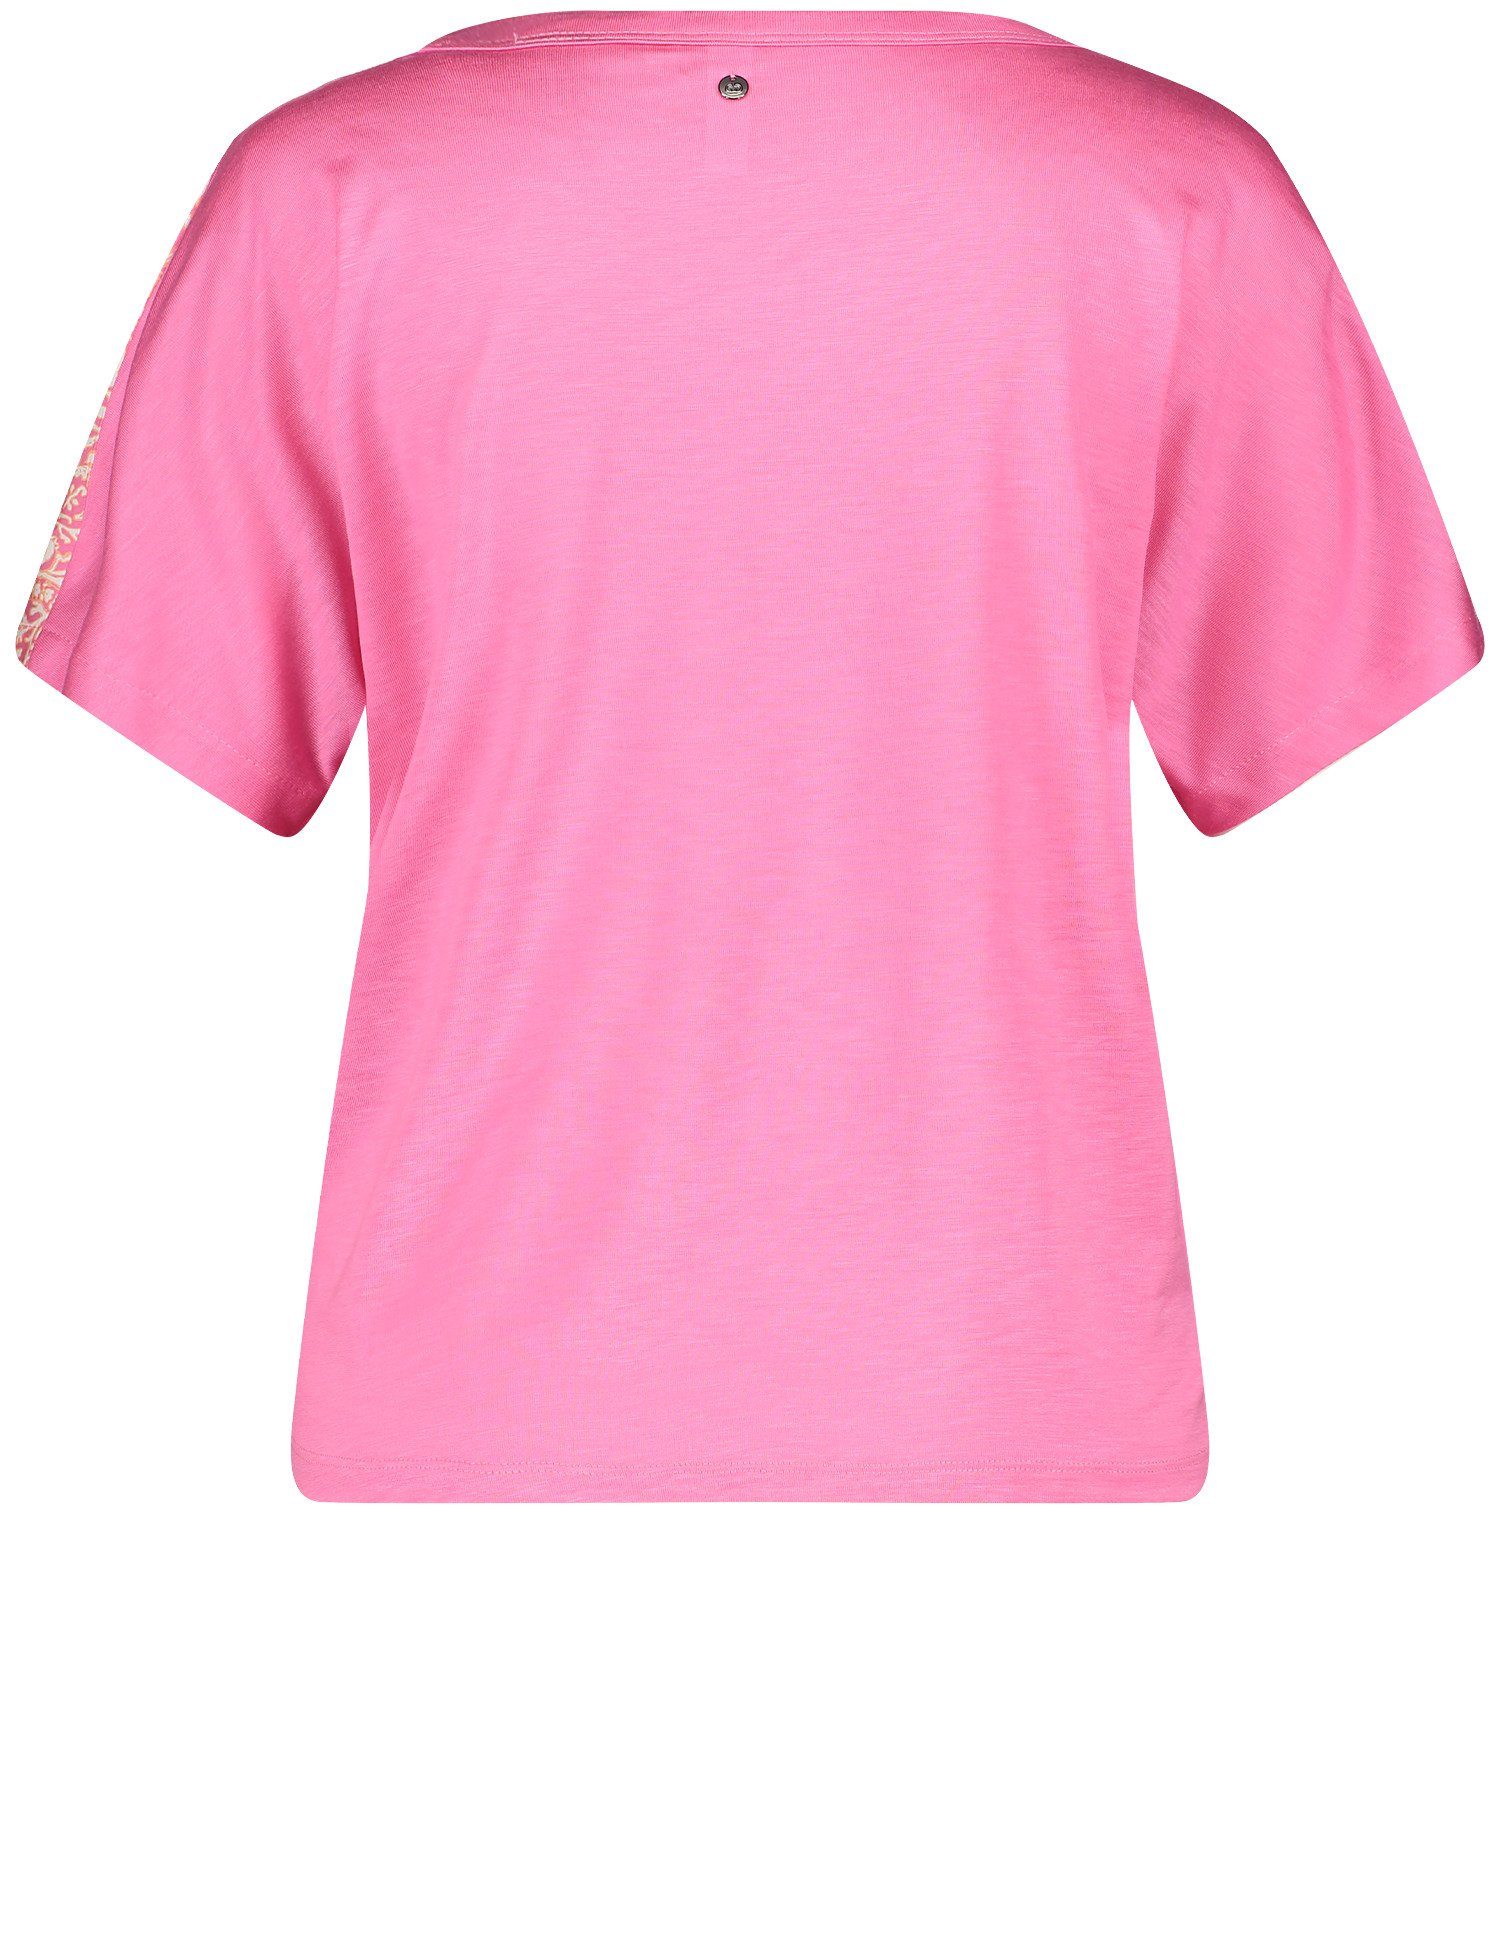 Druck Lila/Pink/Rot/Orange Gemustertes WEBER GERRY mit Seitenschlitzen Kurzarmshirt Kurzarmshirt